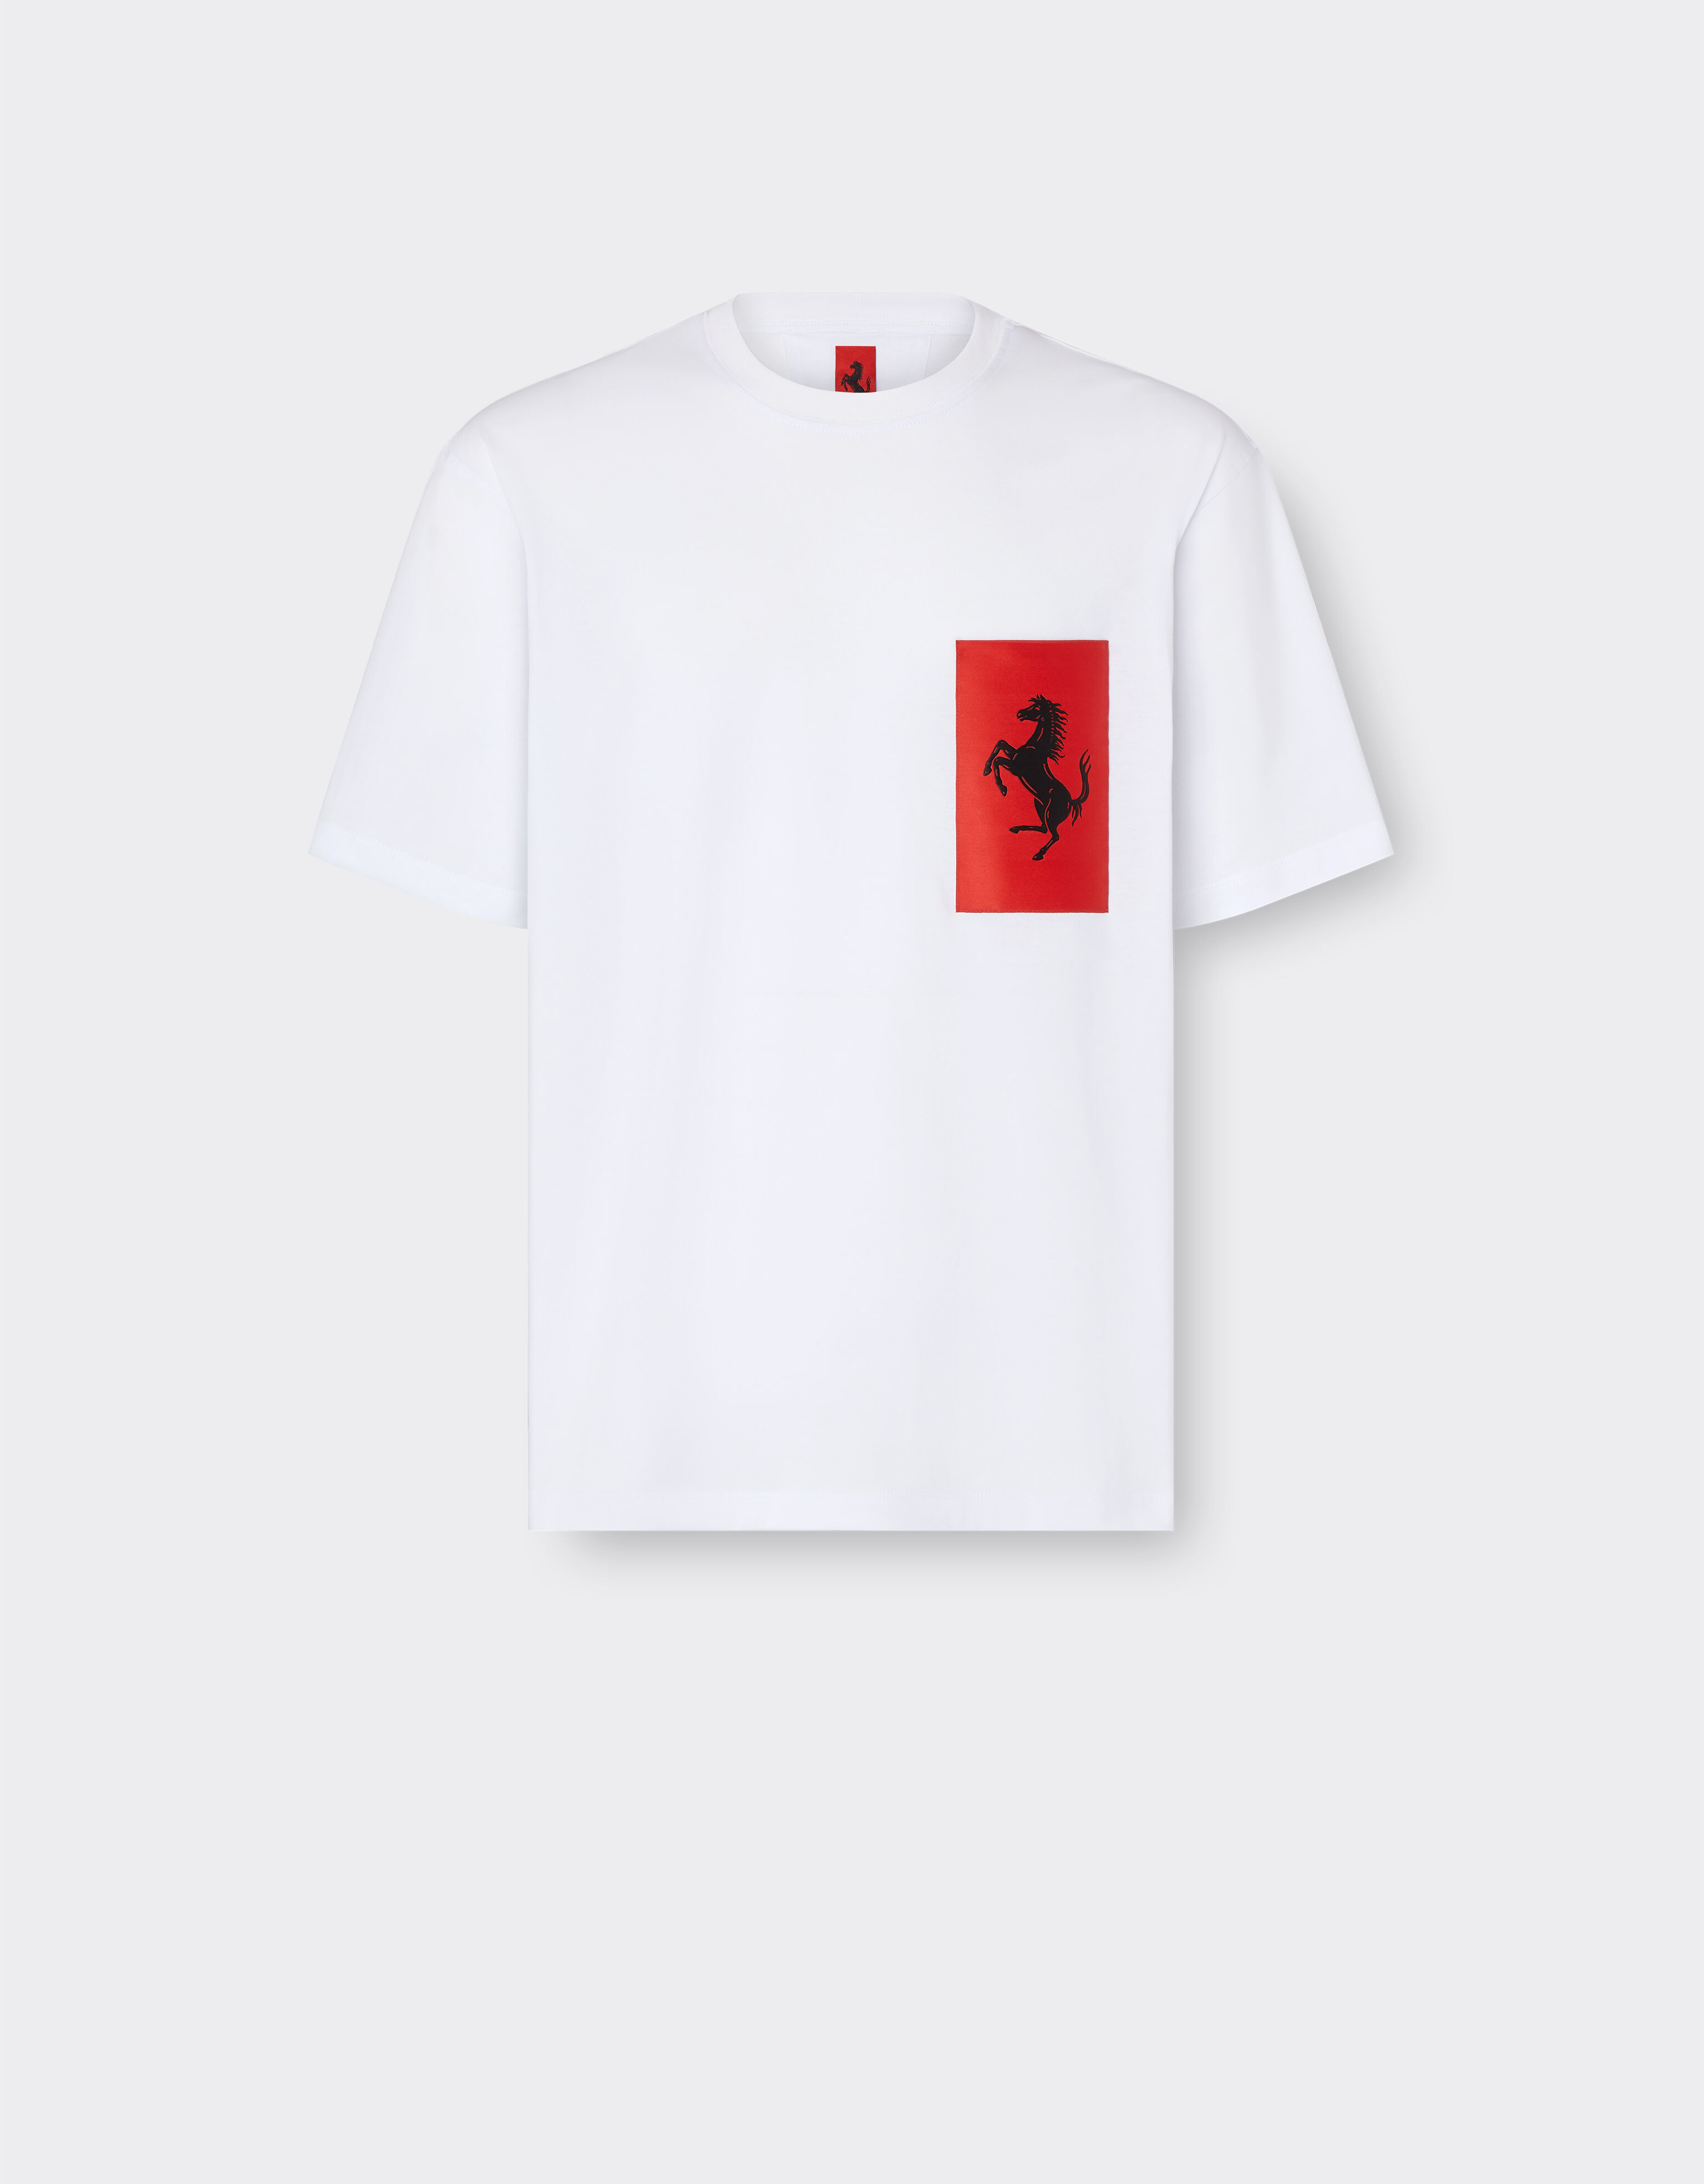 Ferrari Cotton T-shirt with Prancing Horse pocket Optical White 48490f